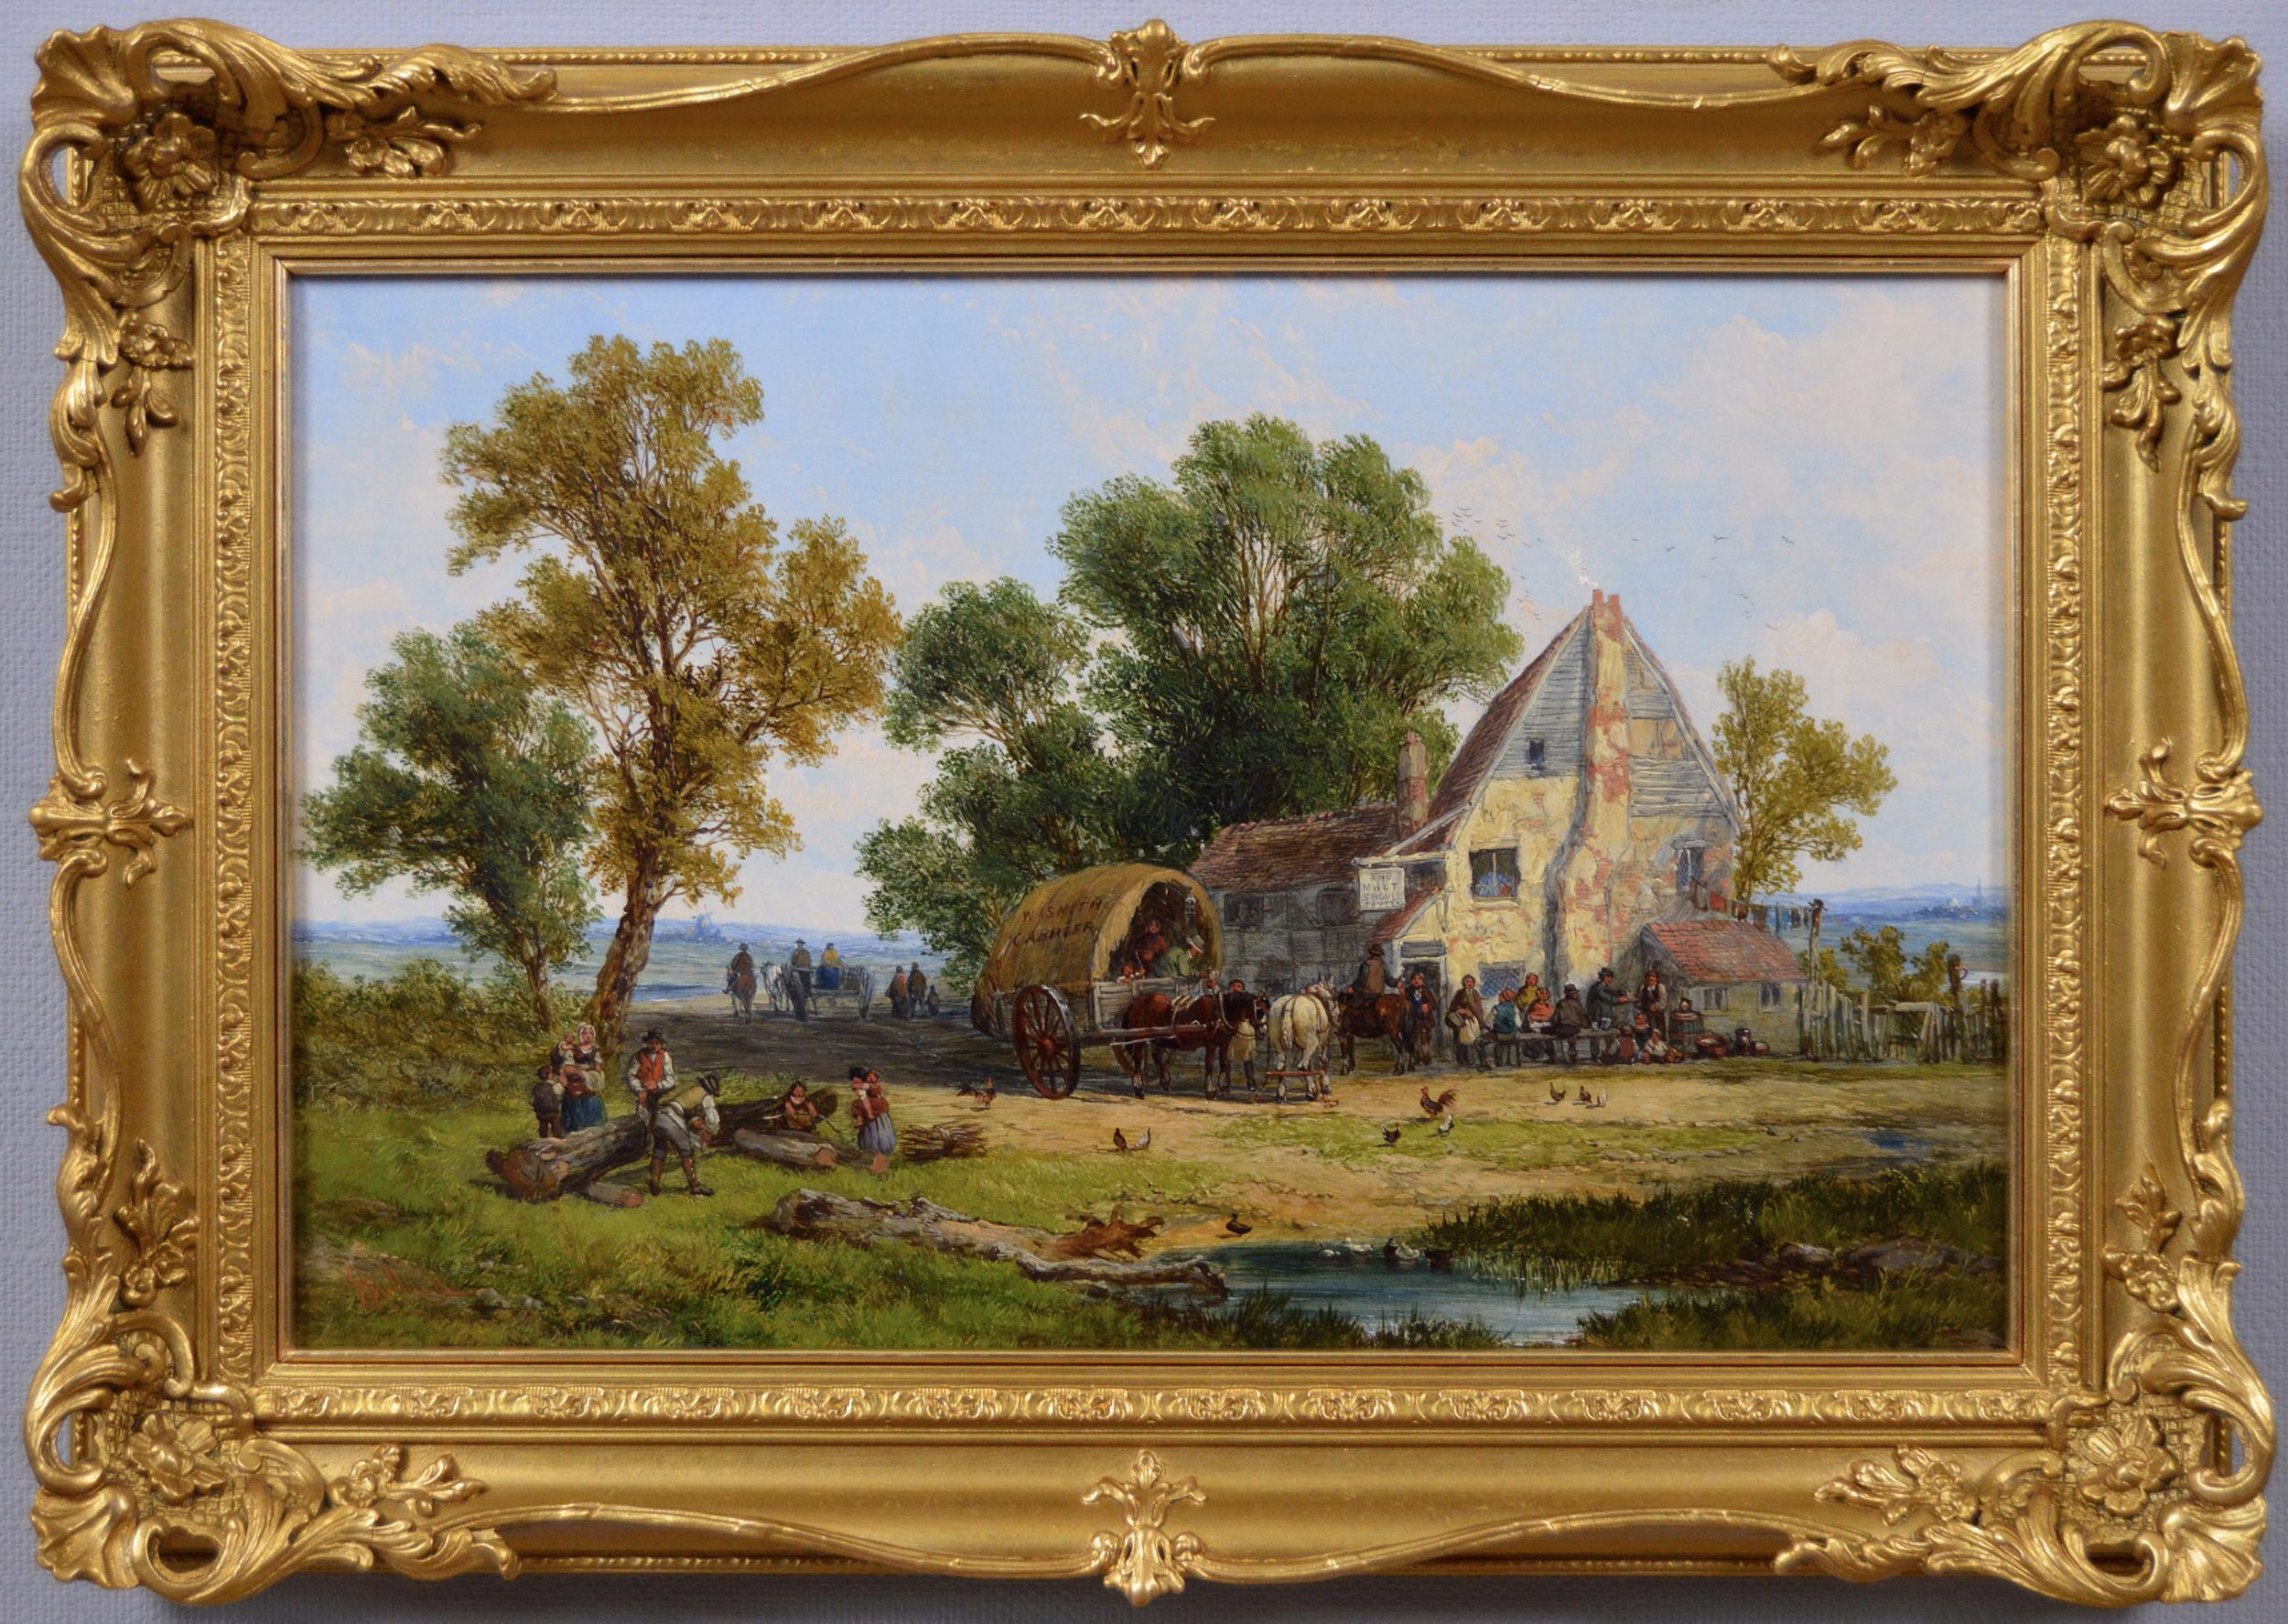 John Holland Senior Landscape Painting - 19th century landscape oil painting of a village tavern